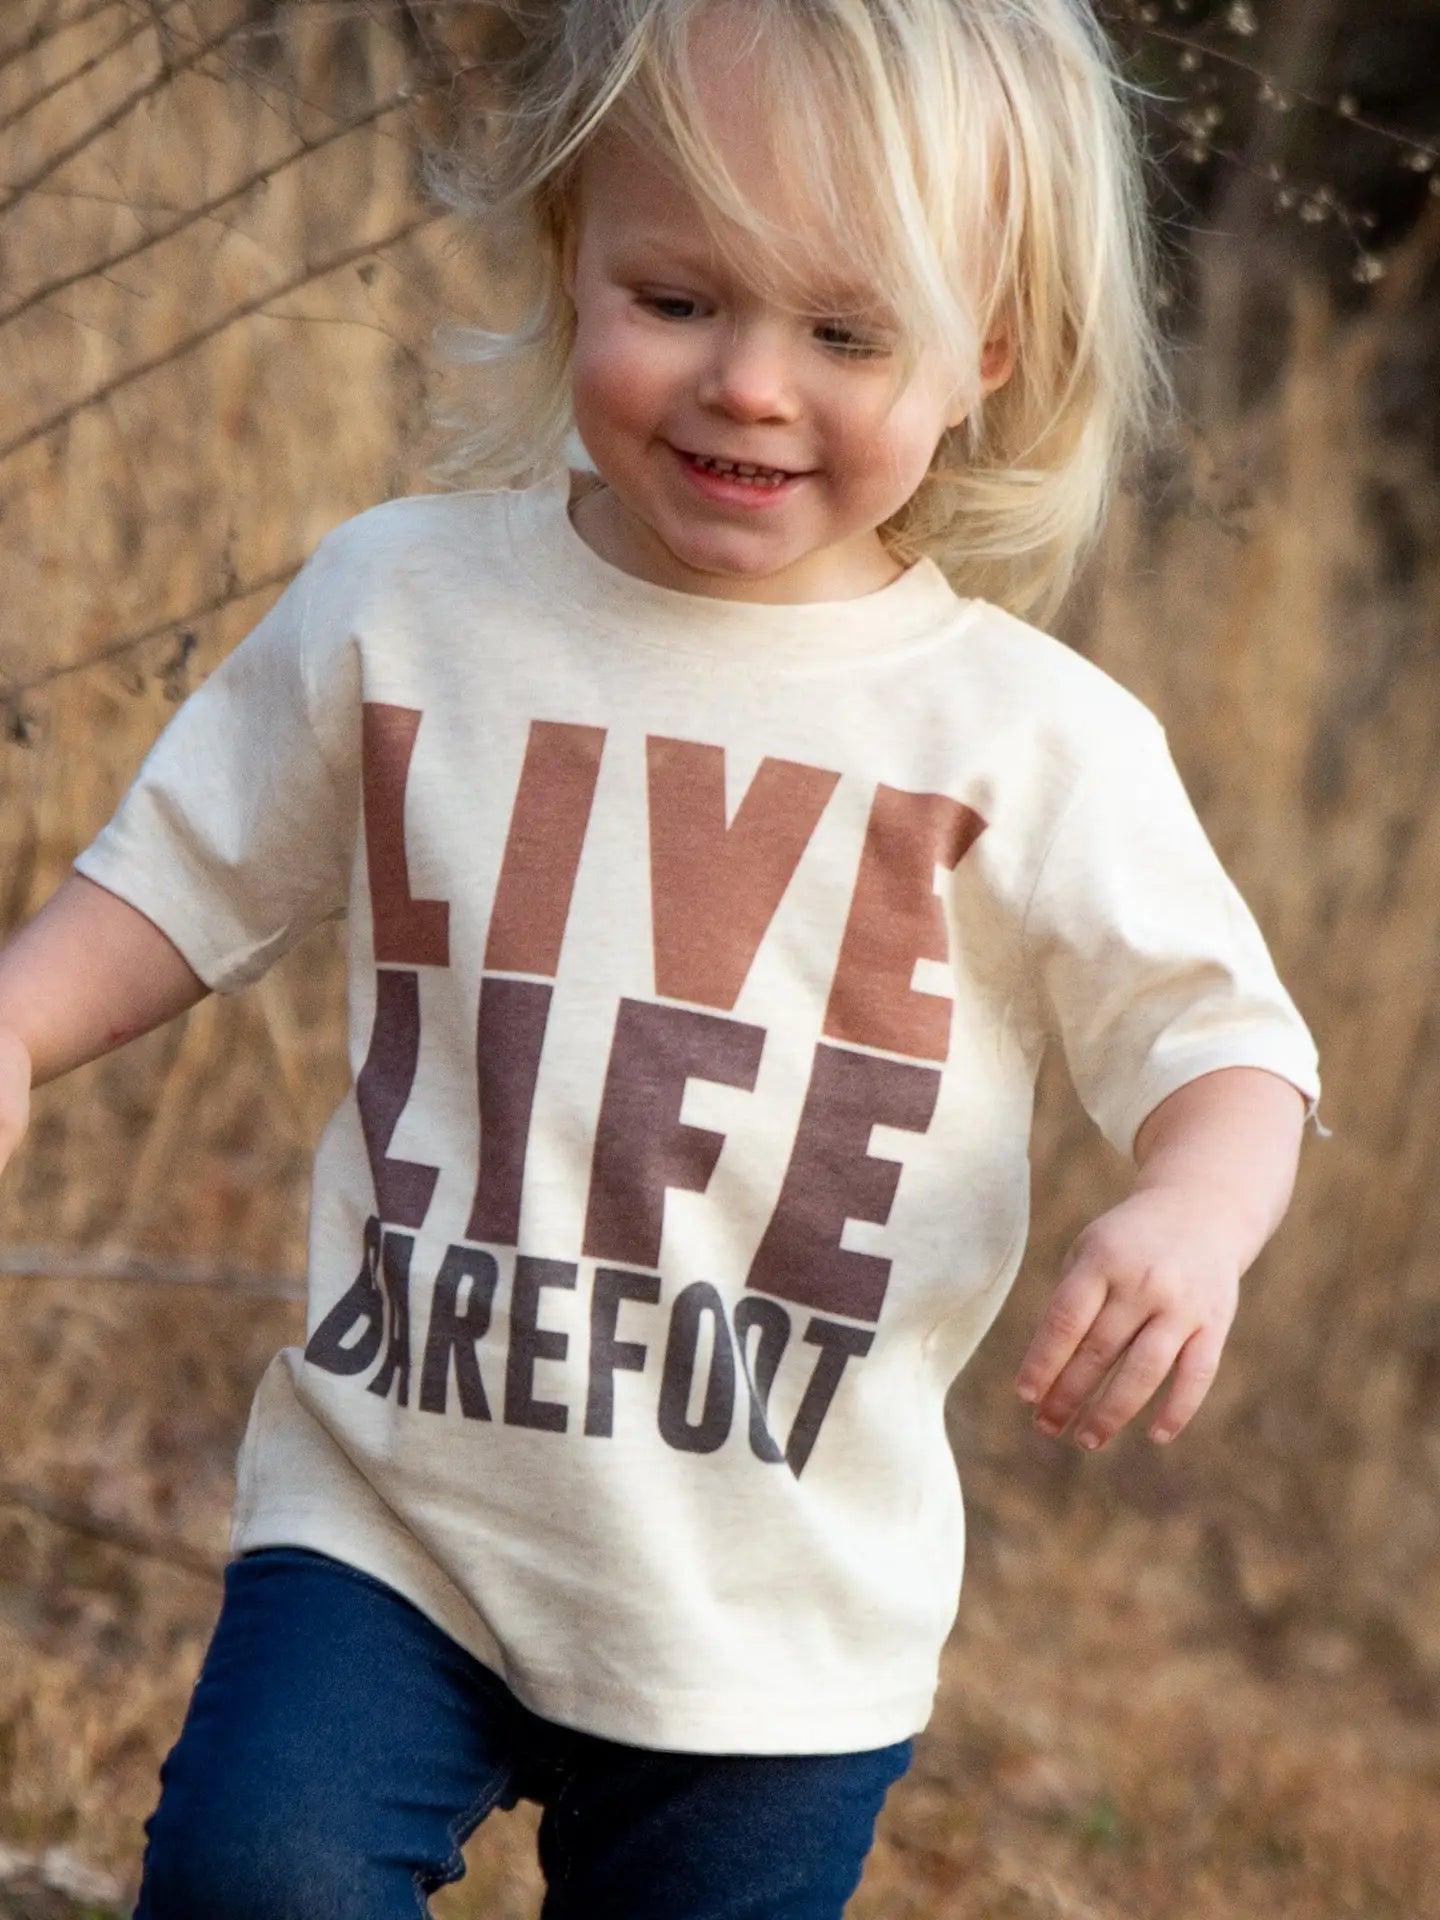 "Live Life Barefoot"